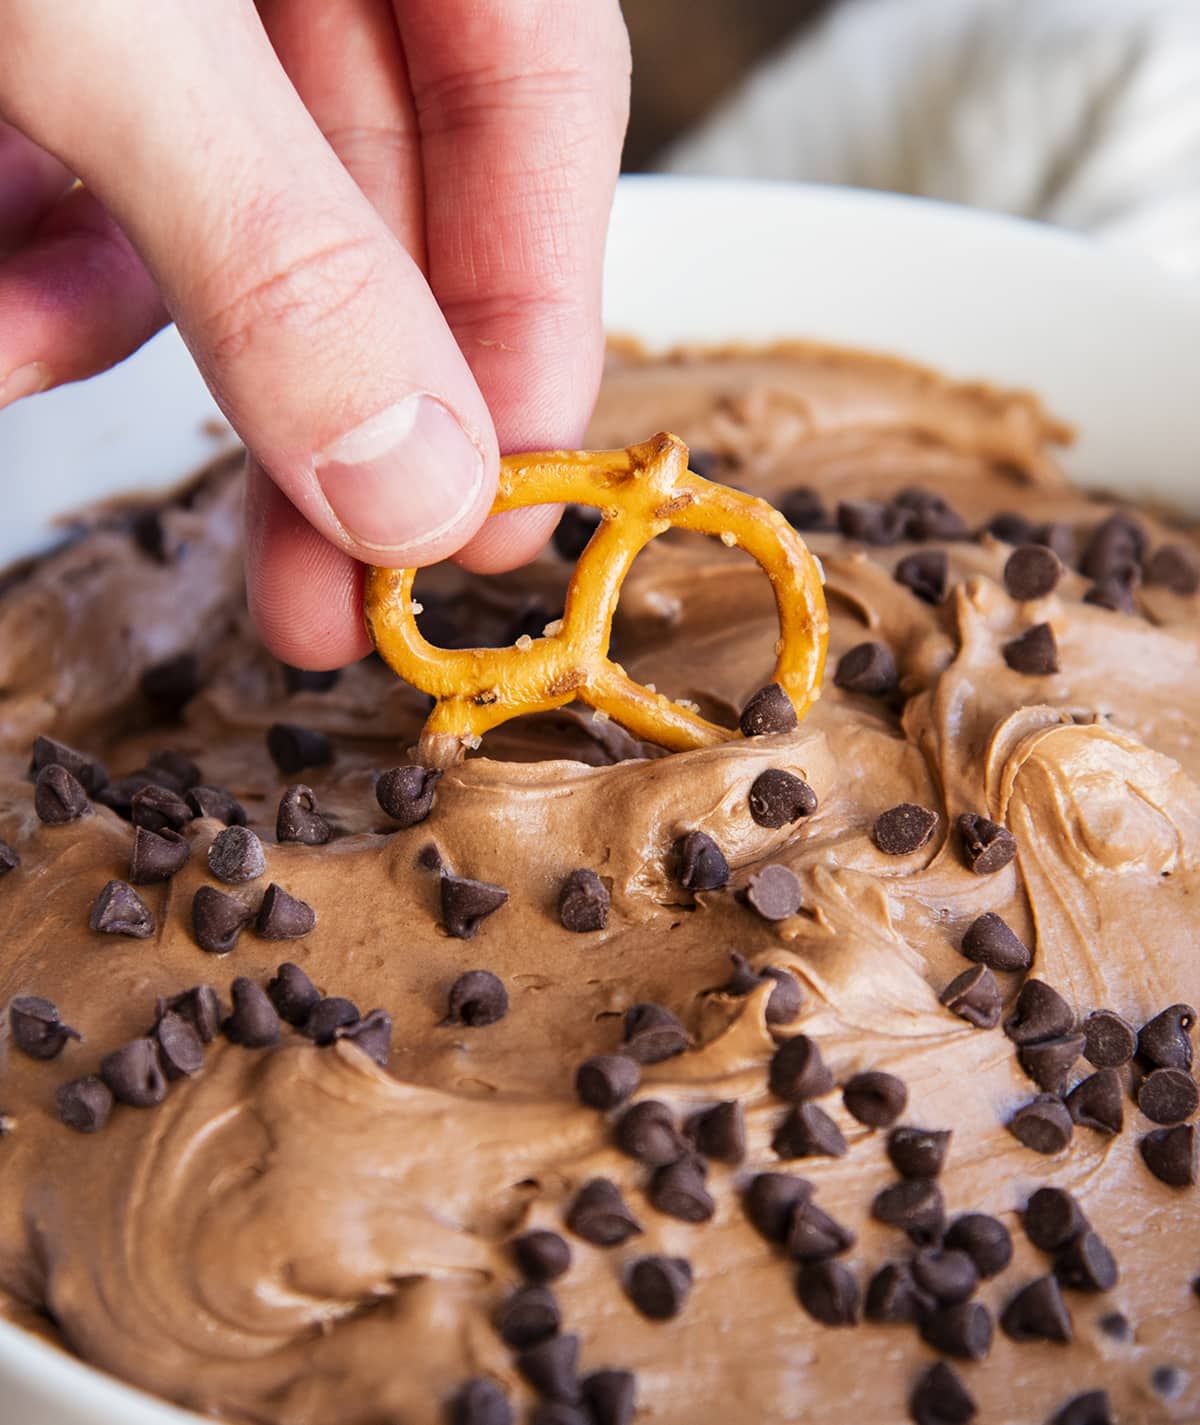 A hand dipping a pretzel into brownie batter dip.